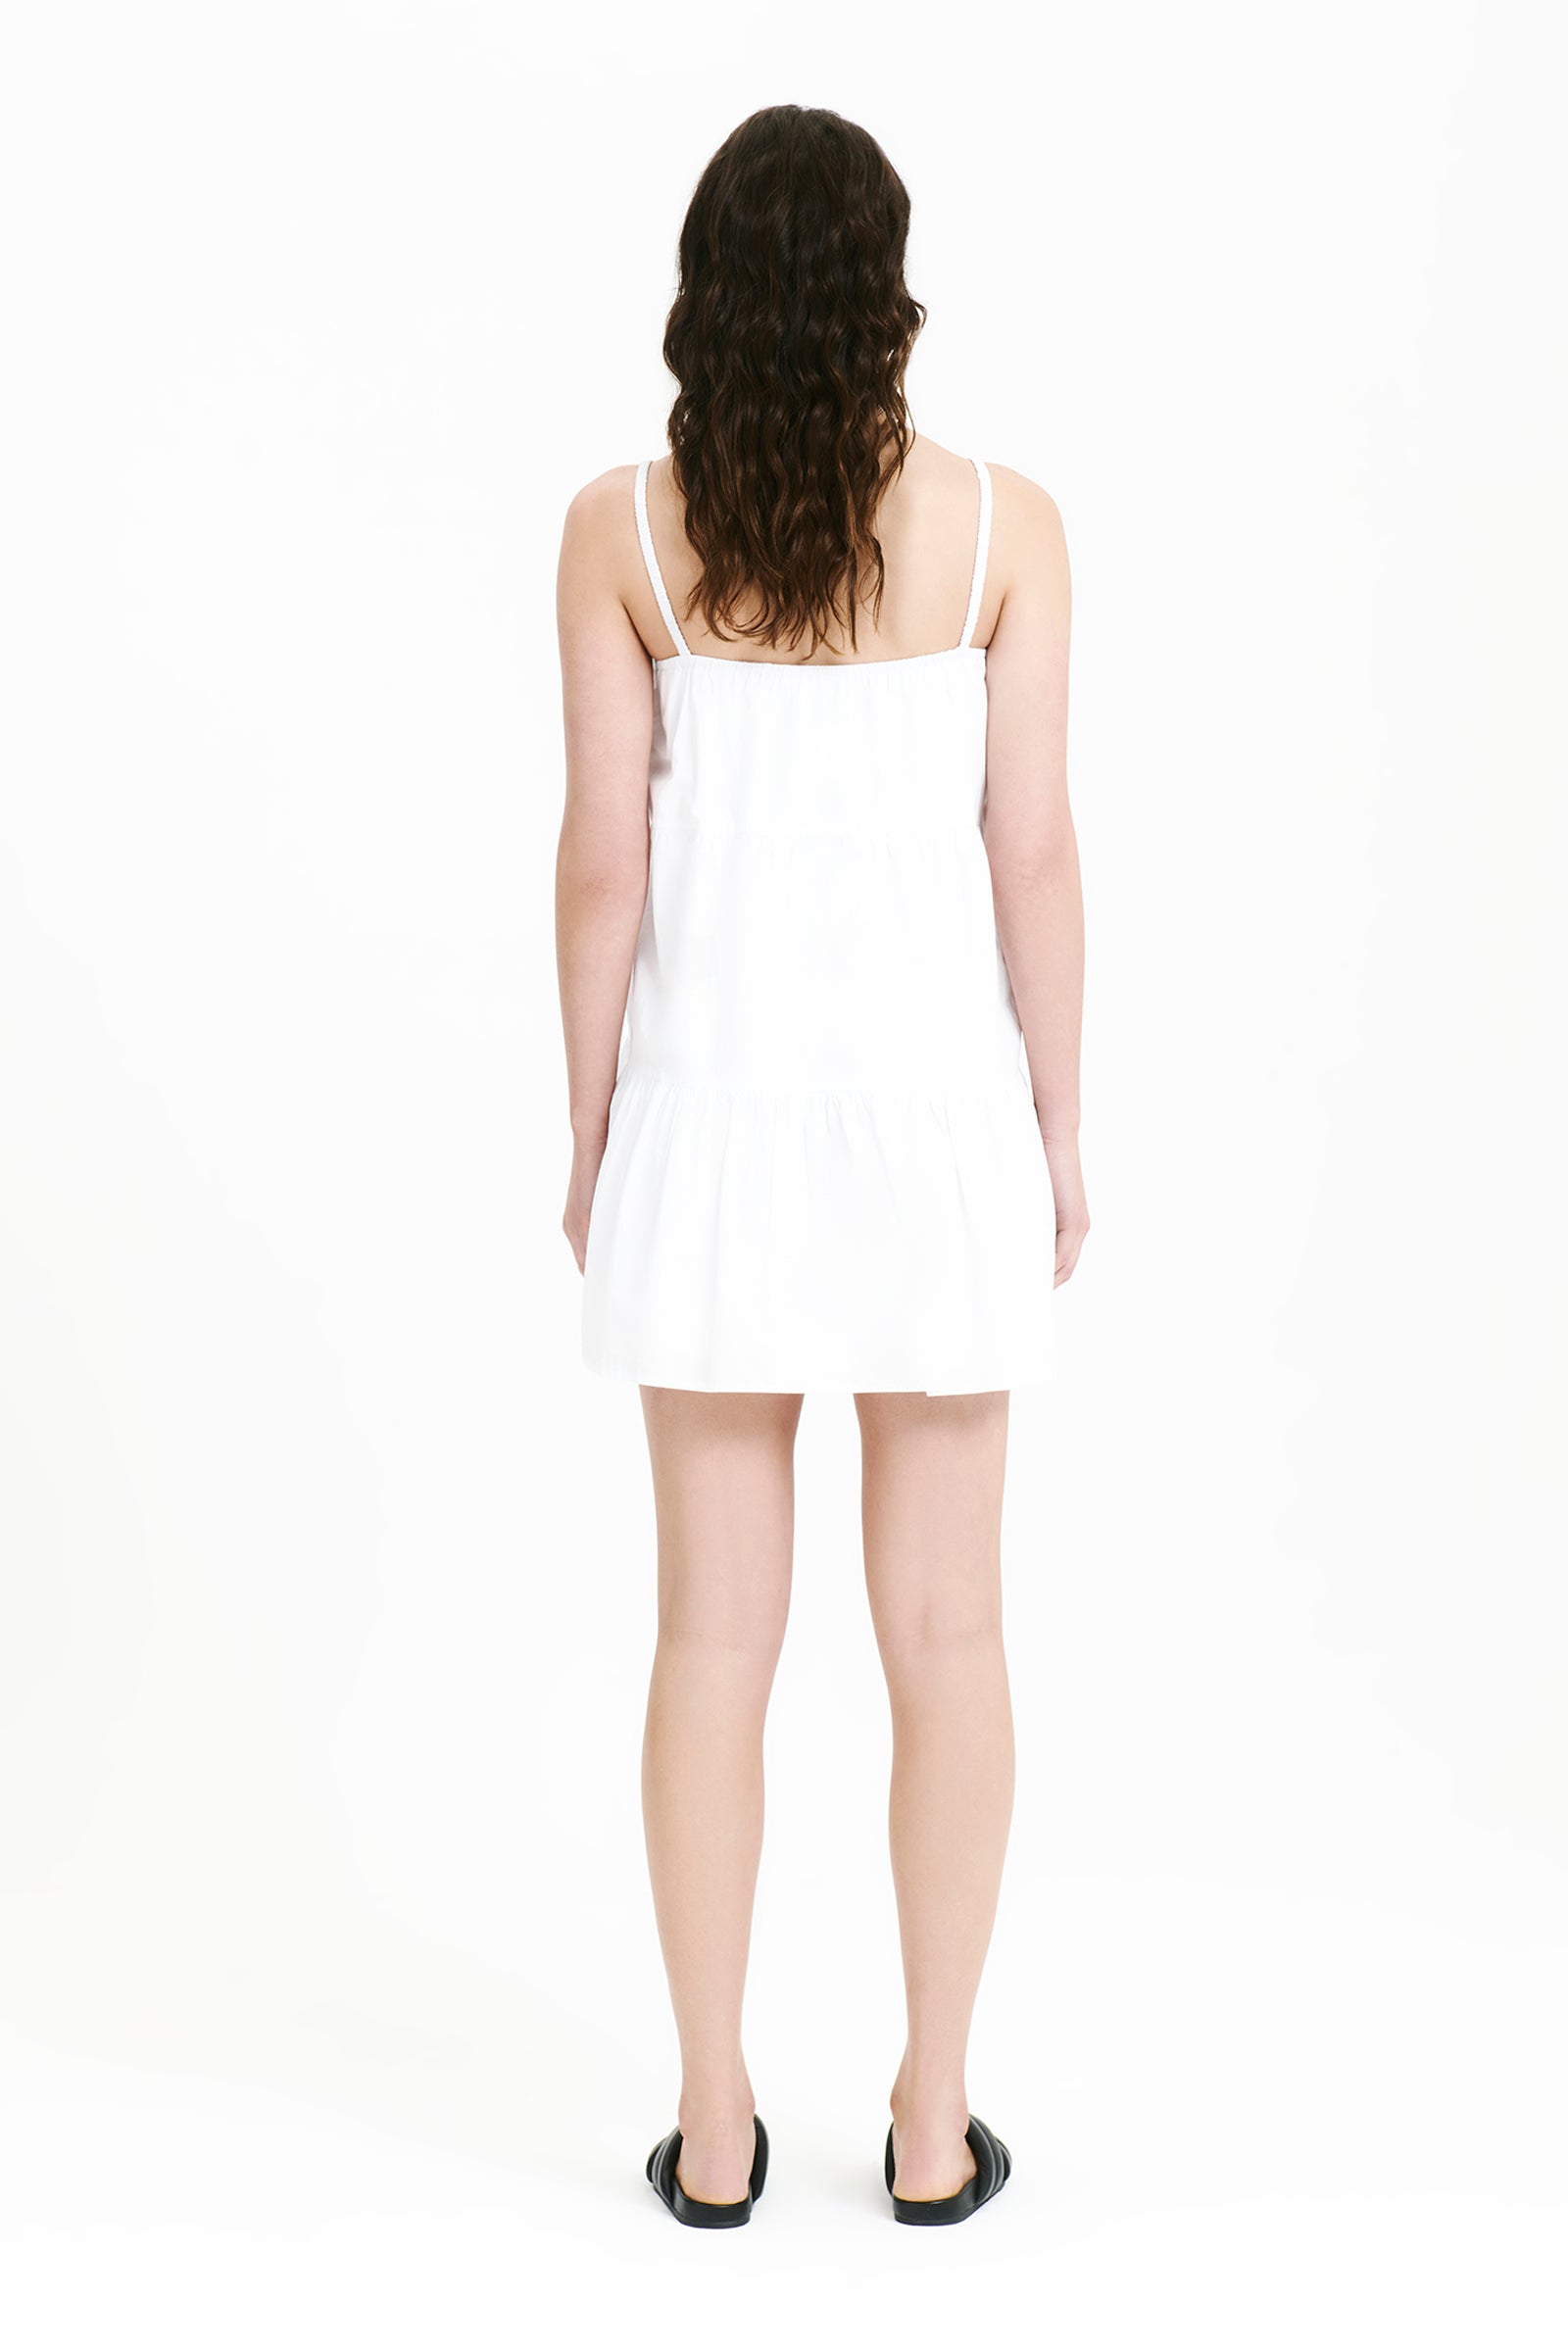 Nude Lucy Renna Mini Dress in White